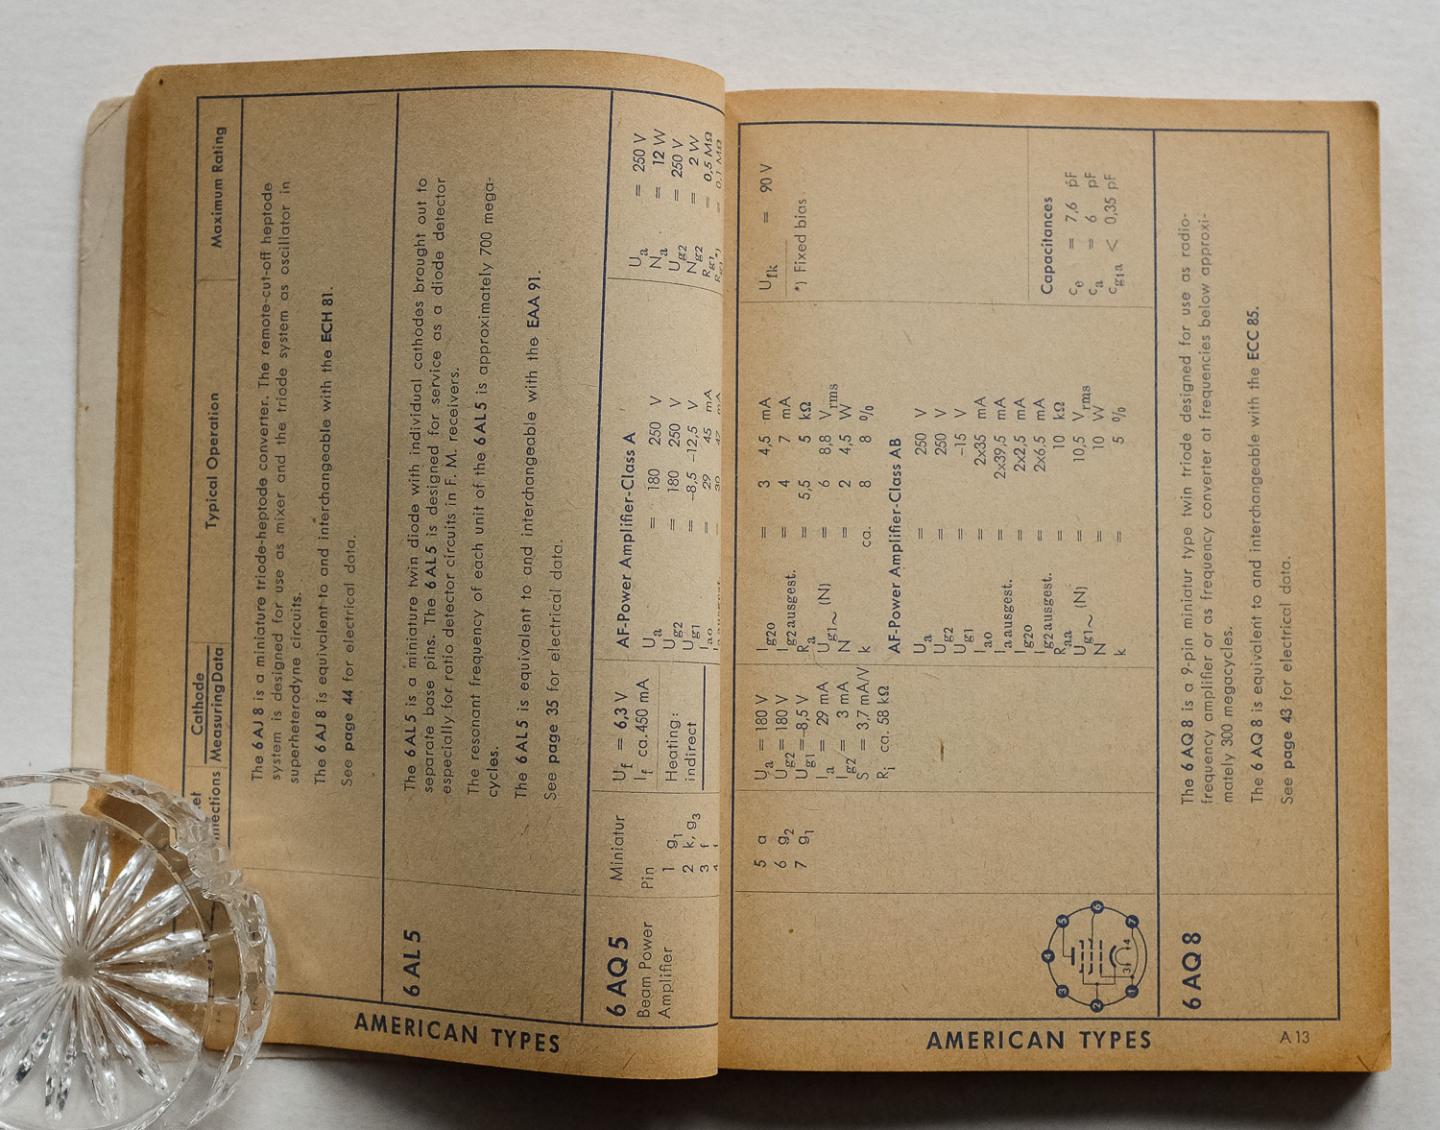  - Telefunken - Receiving tubes - technical data 1957